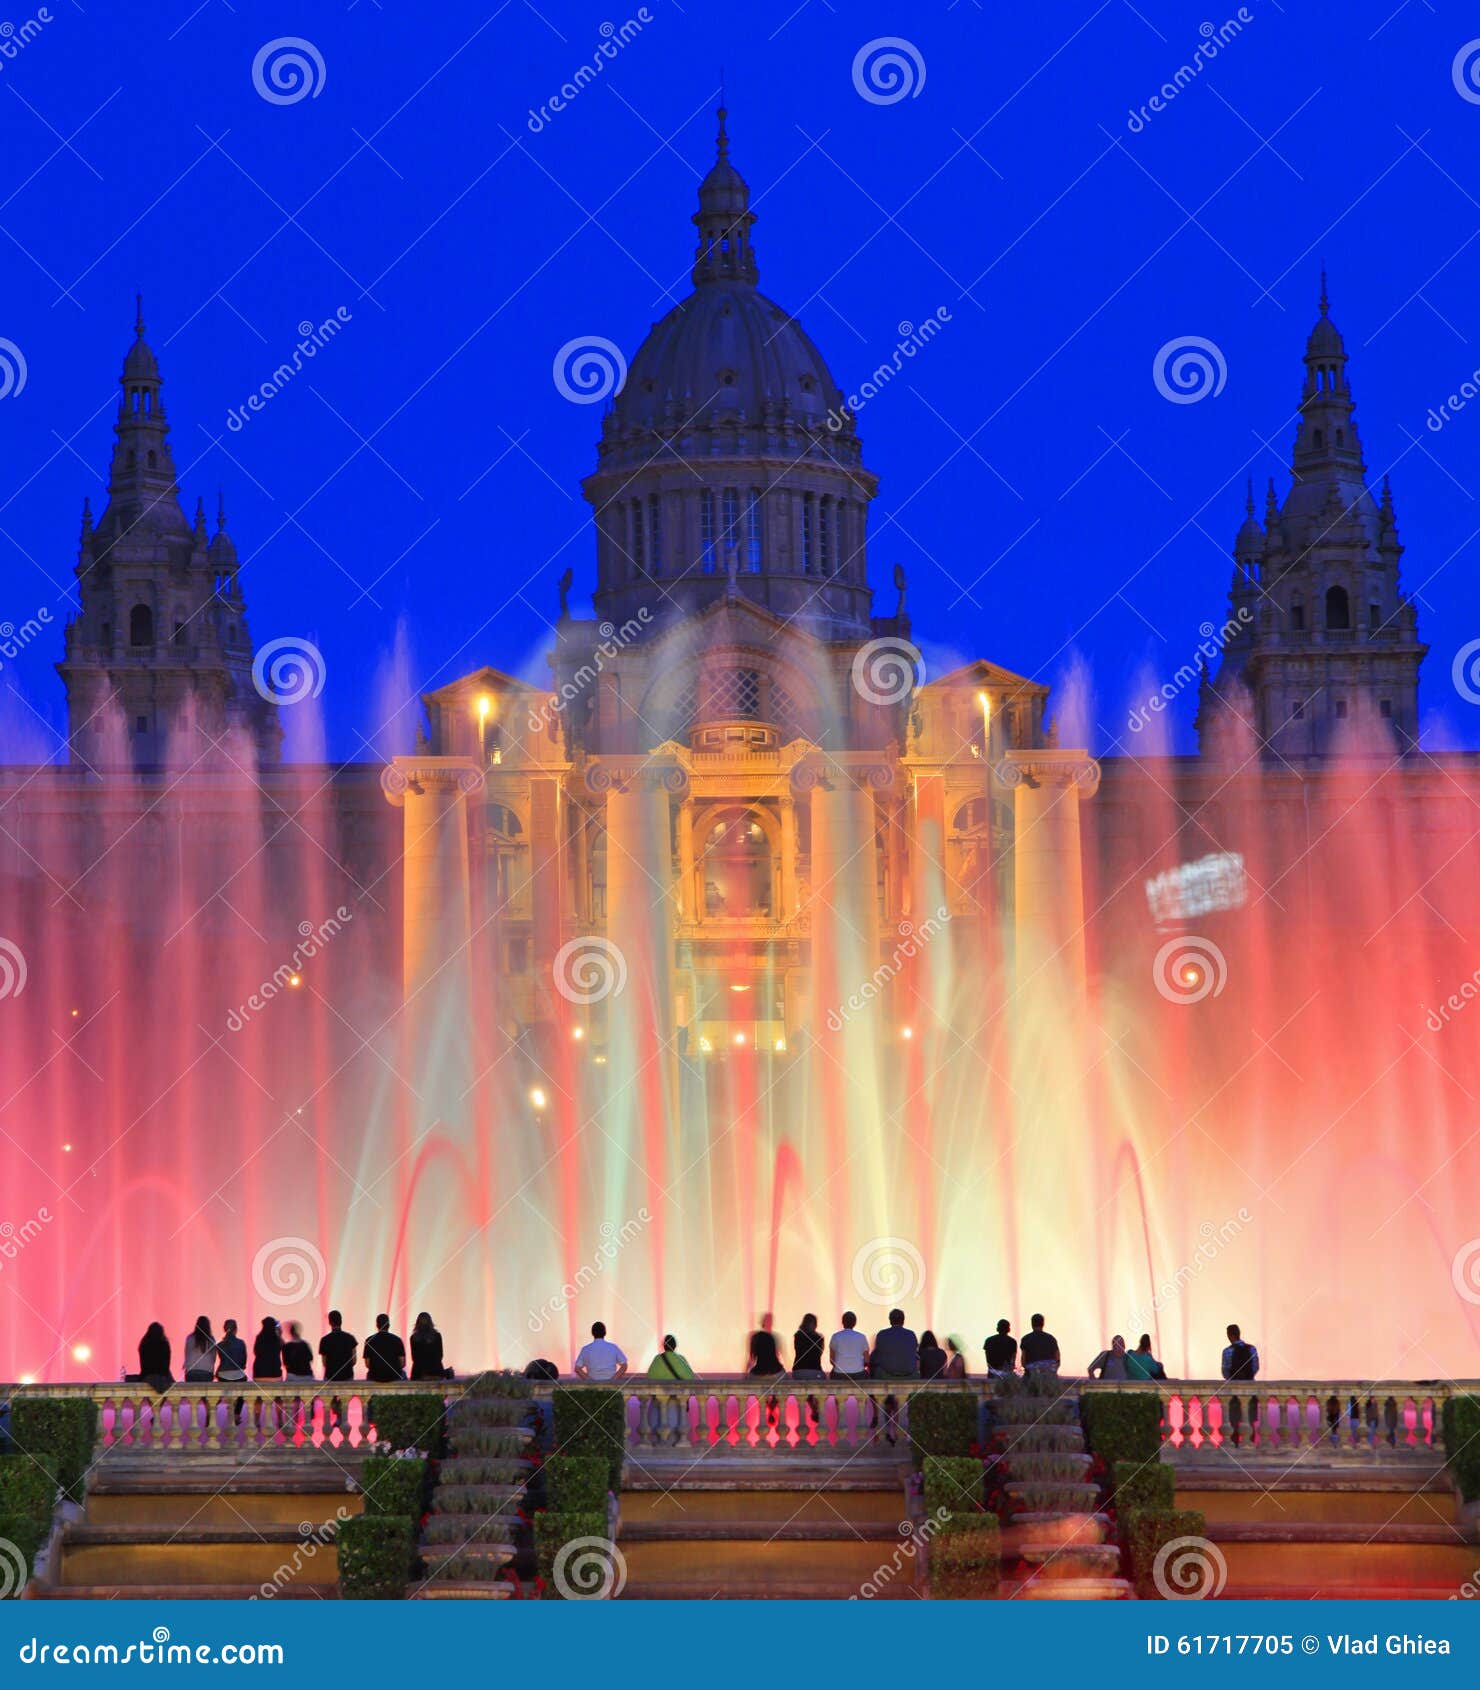 museu nacional d'art de catalunya and magic fountain at dusk, barcelona, spain